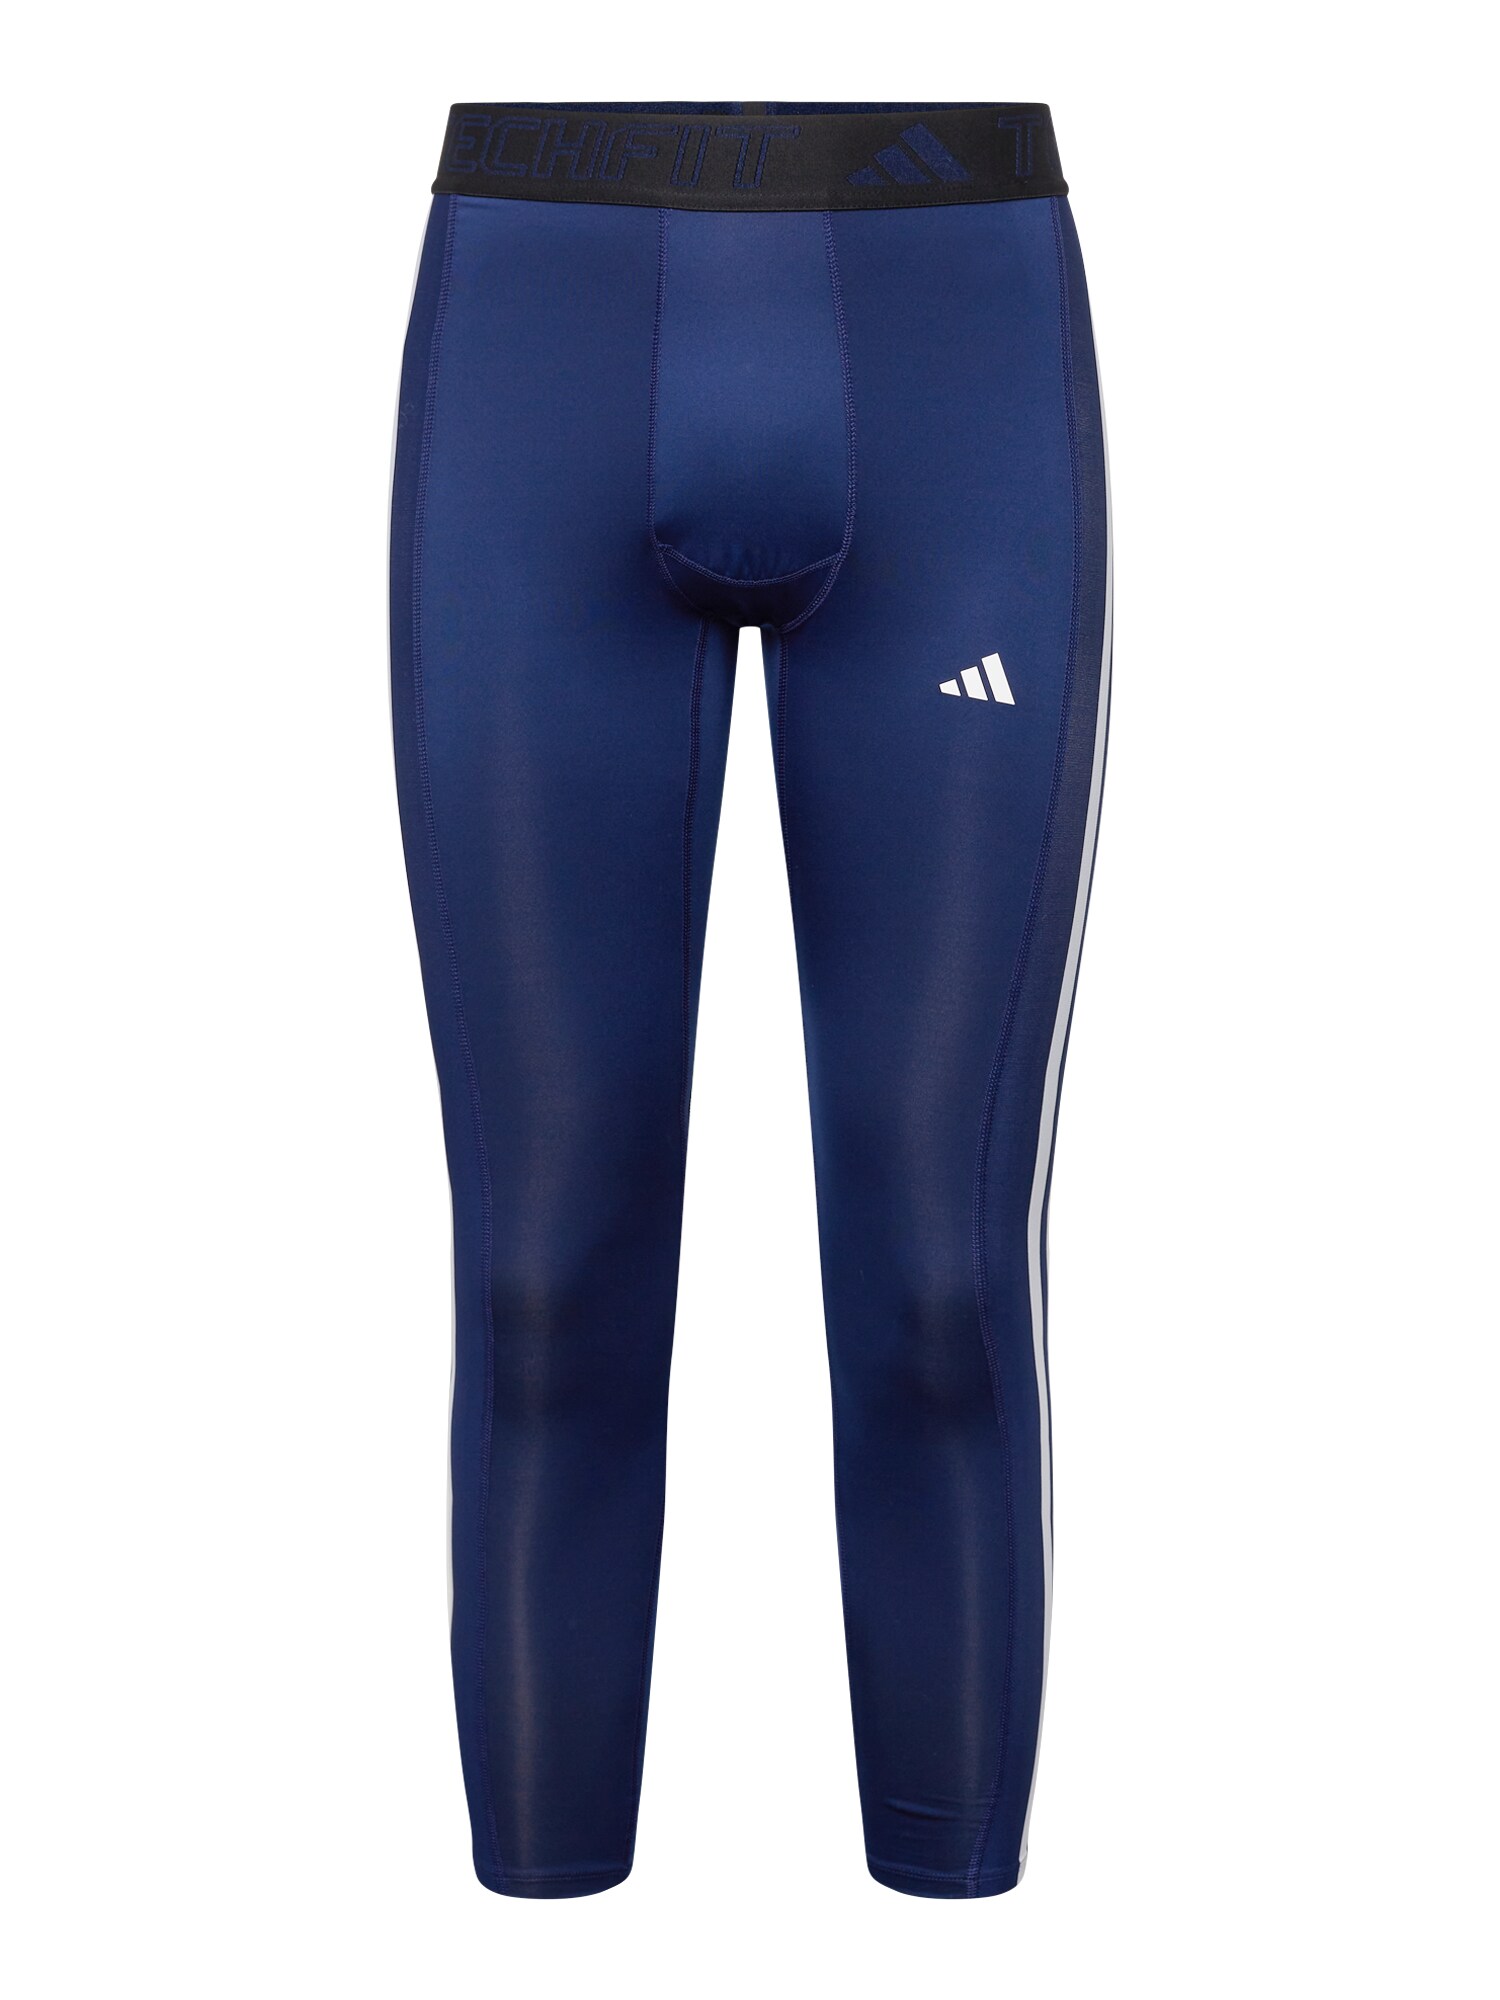 ADIDAS PERFORMANCE Športne hlače  marine / temno modra / bela